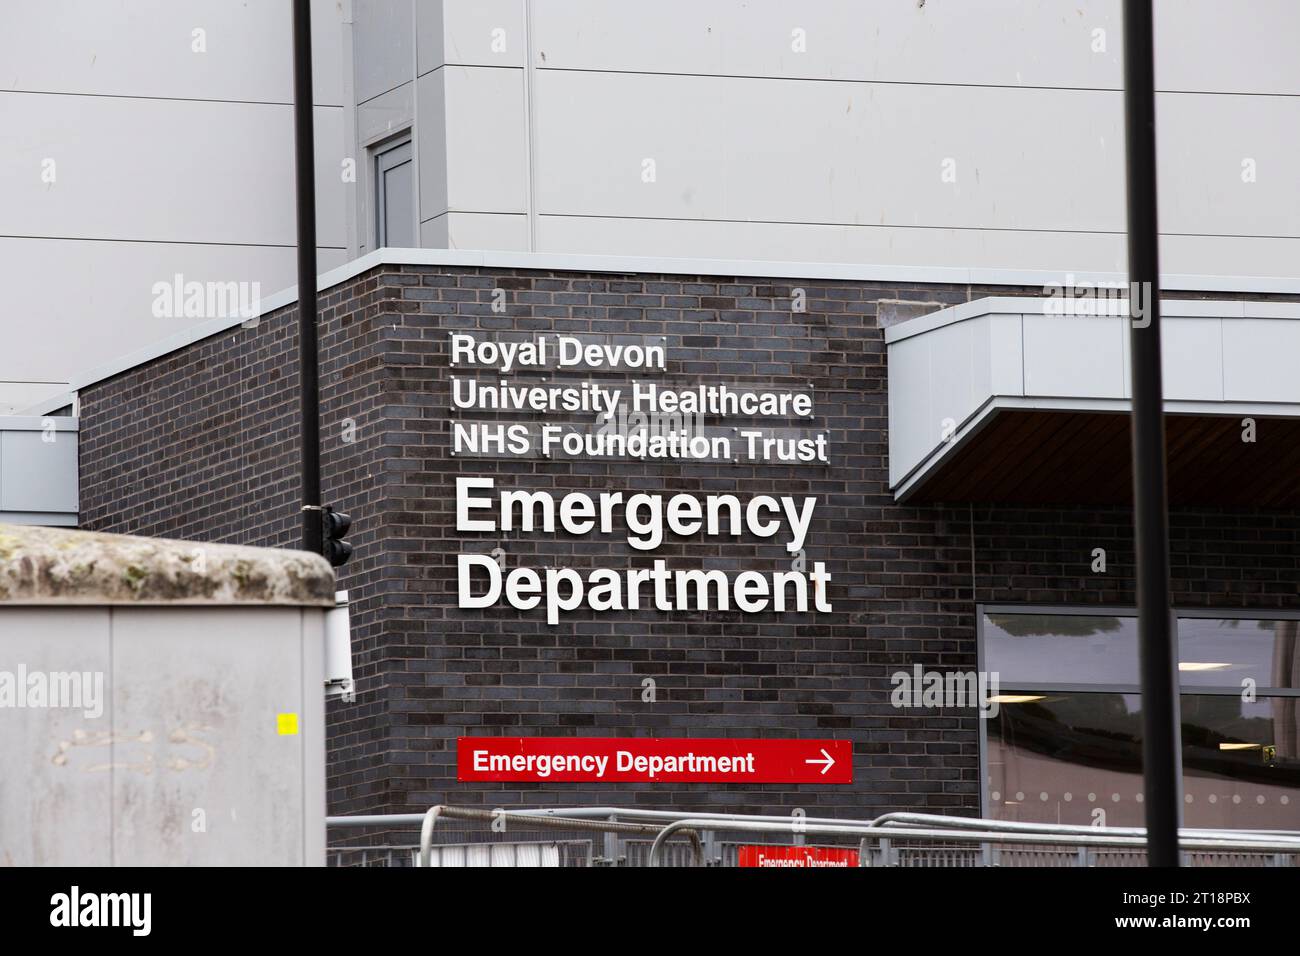 Emergency Department building entrance for Royal Devon & Exeter Hospital Stock Photo